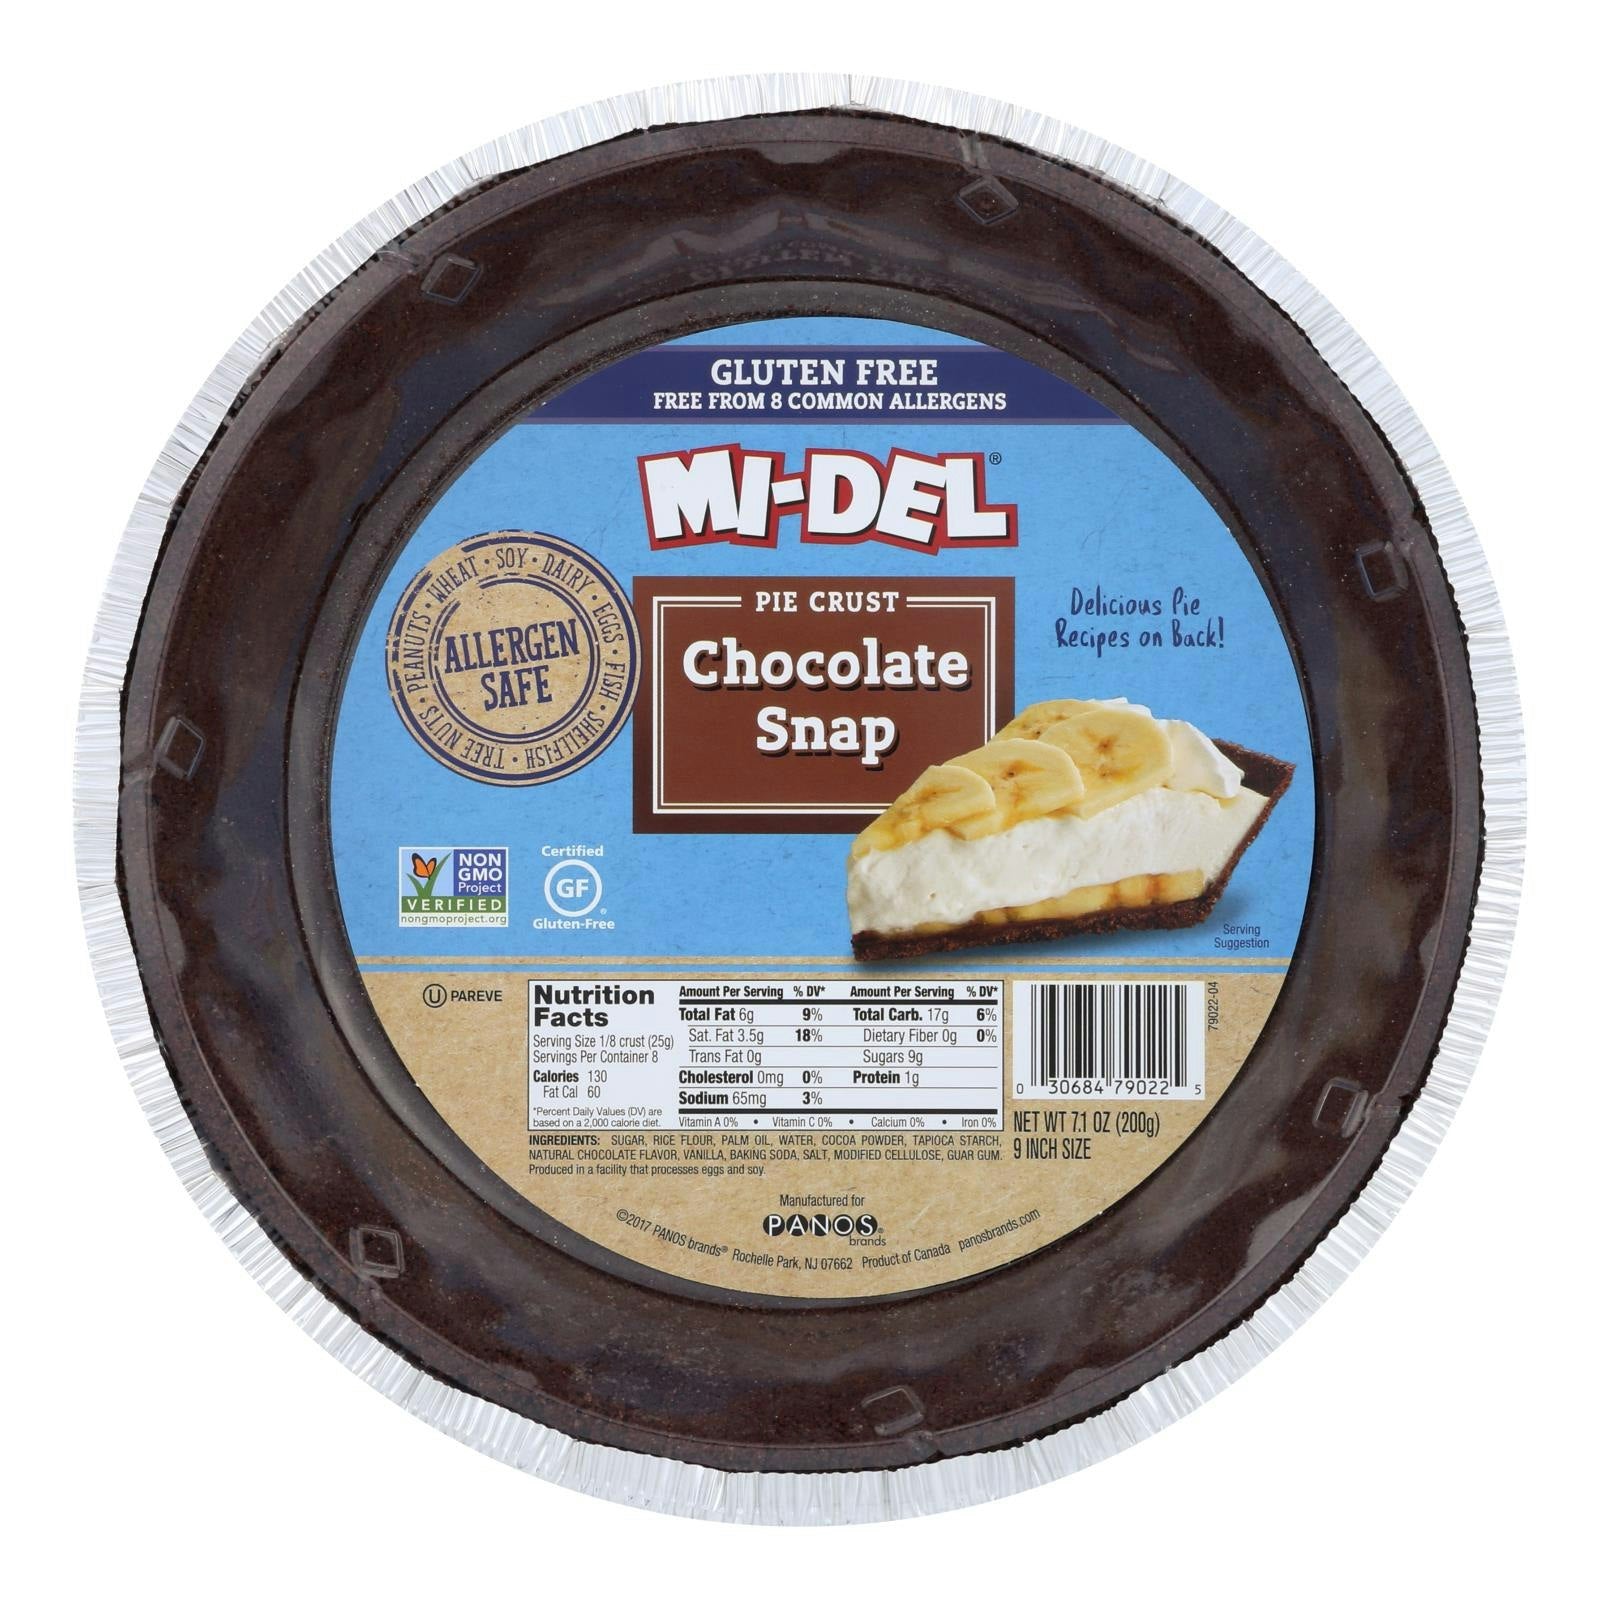 MI DEL Pie Crust Gluten Free Chocolate Snap 7.1 Oz Pack of 12